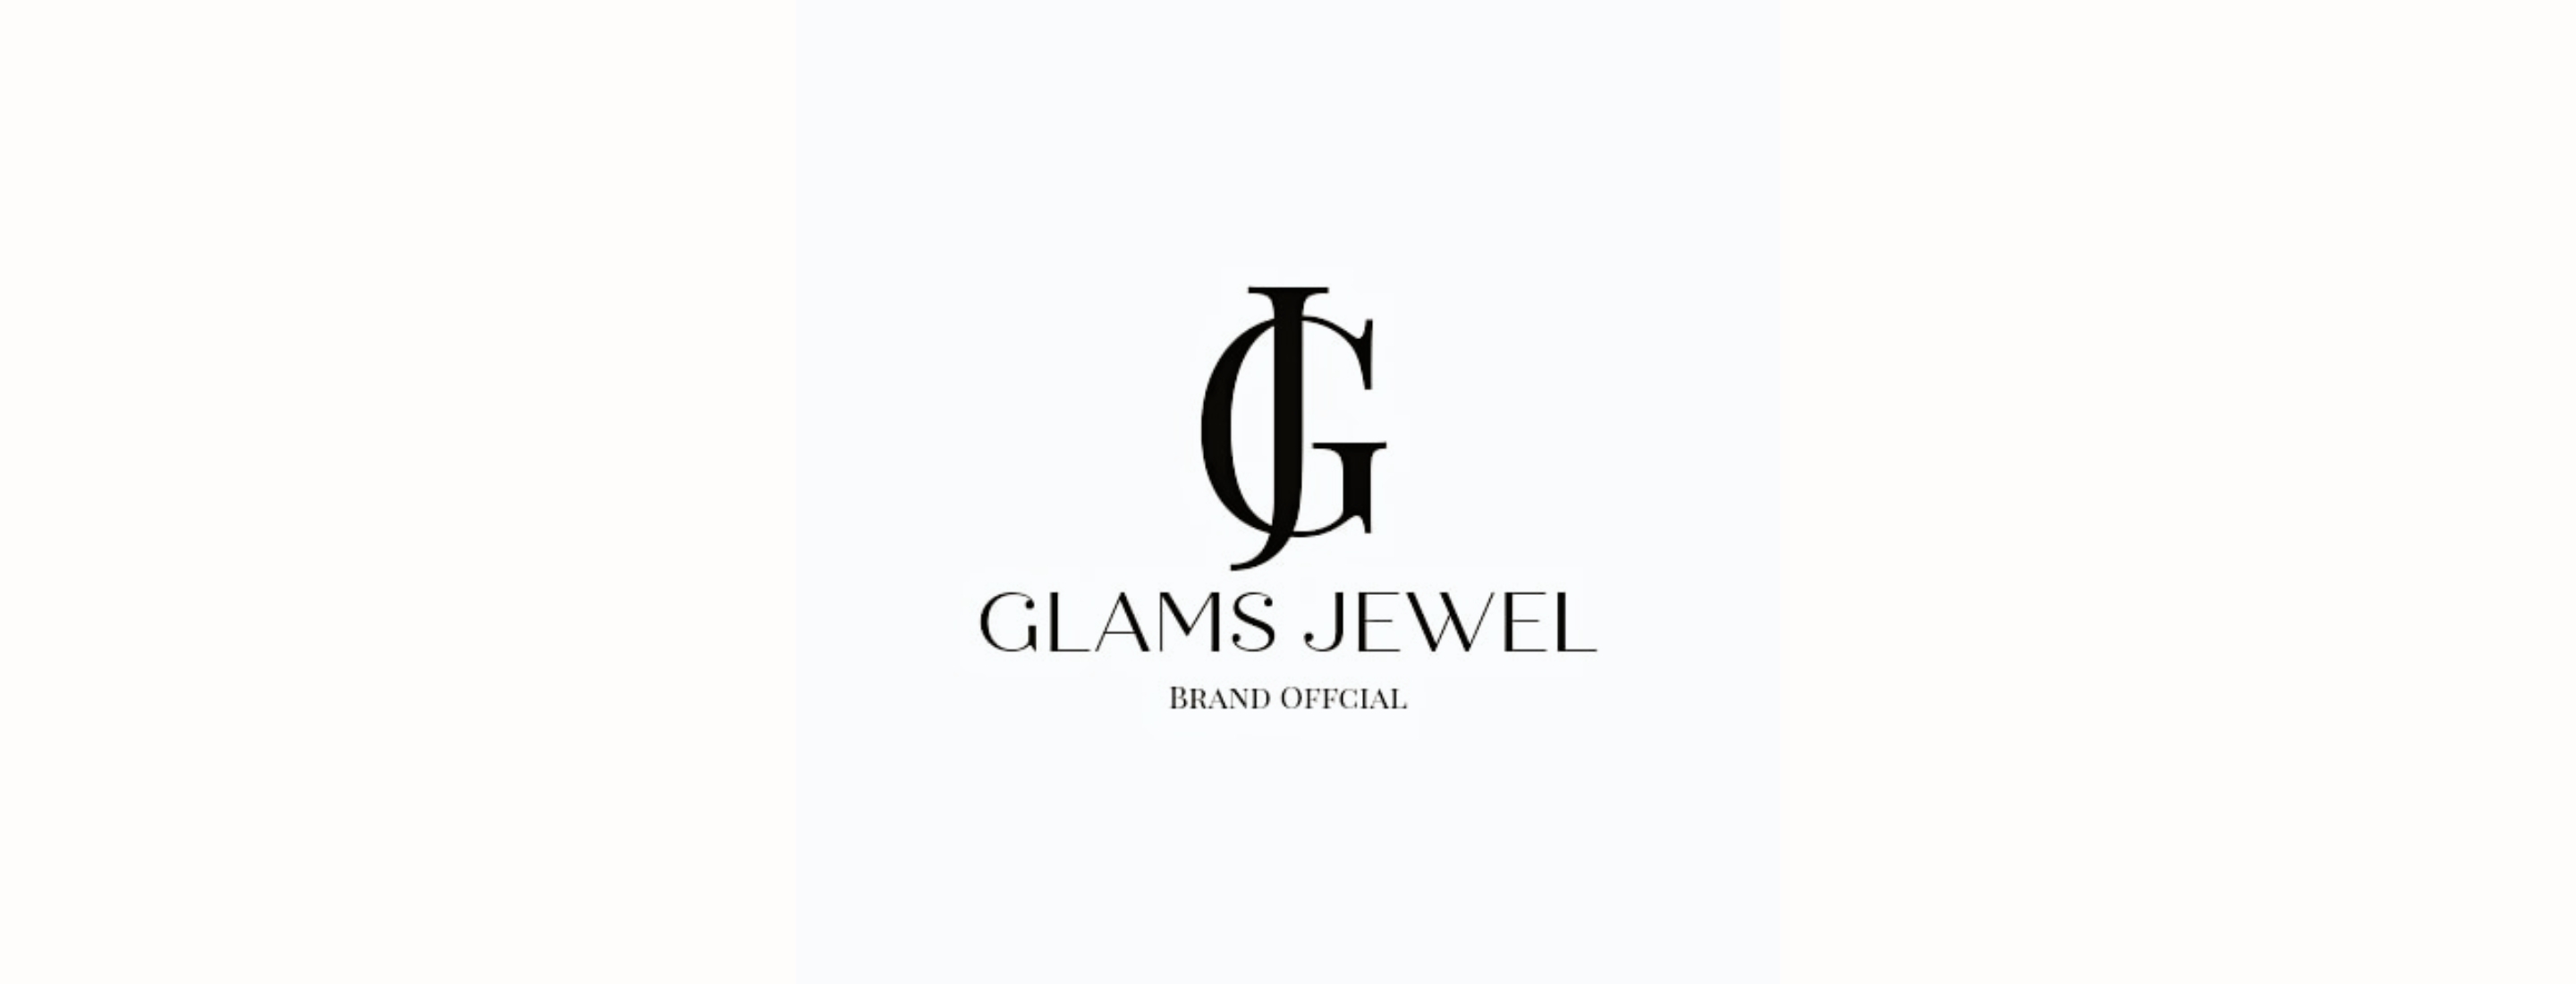 glams-jewel-banner